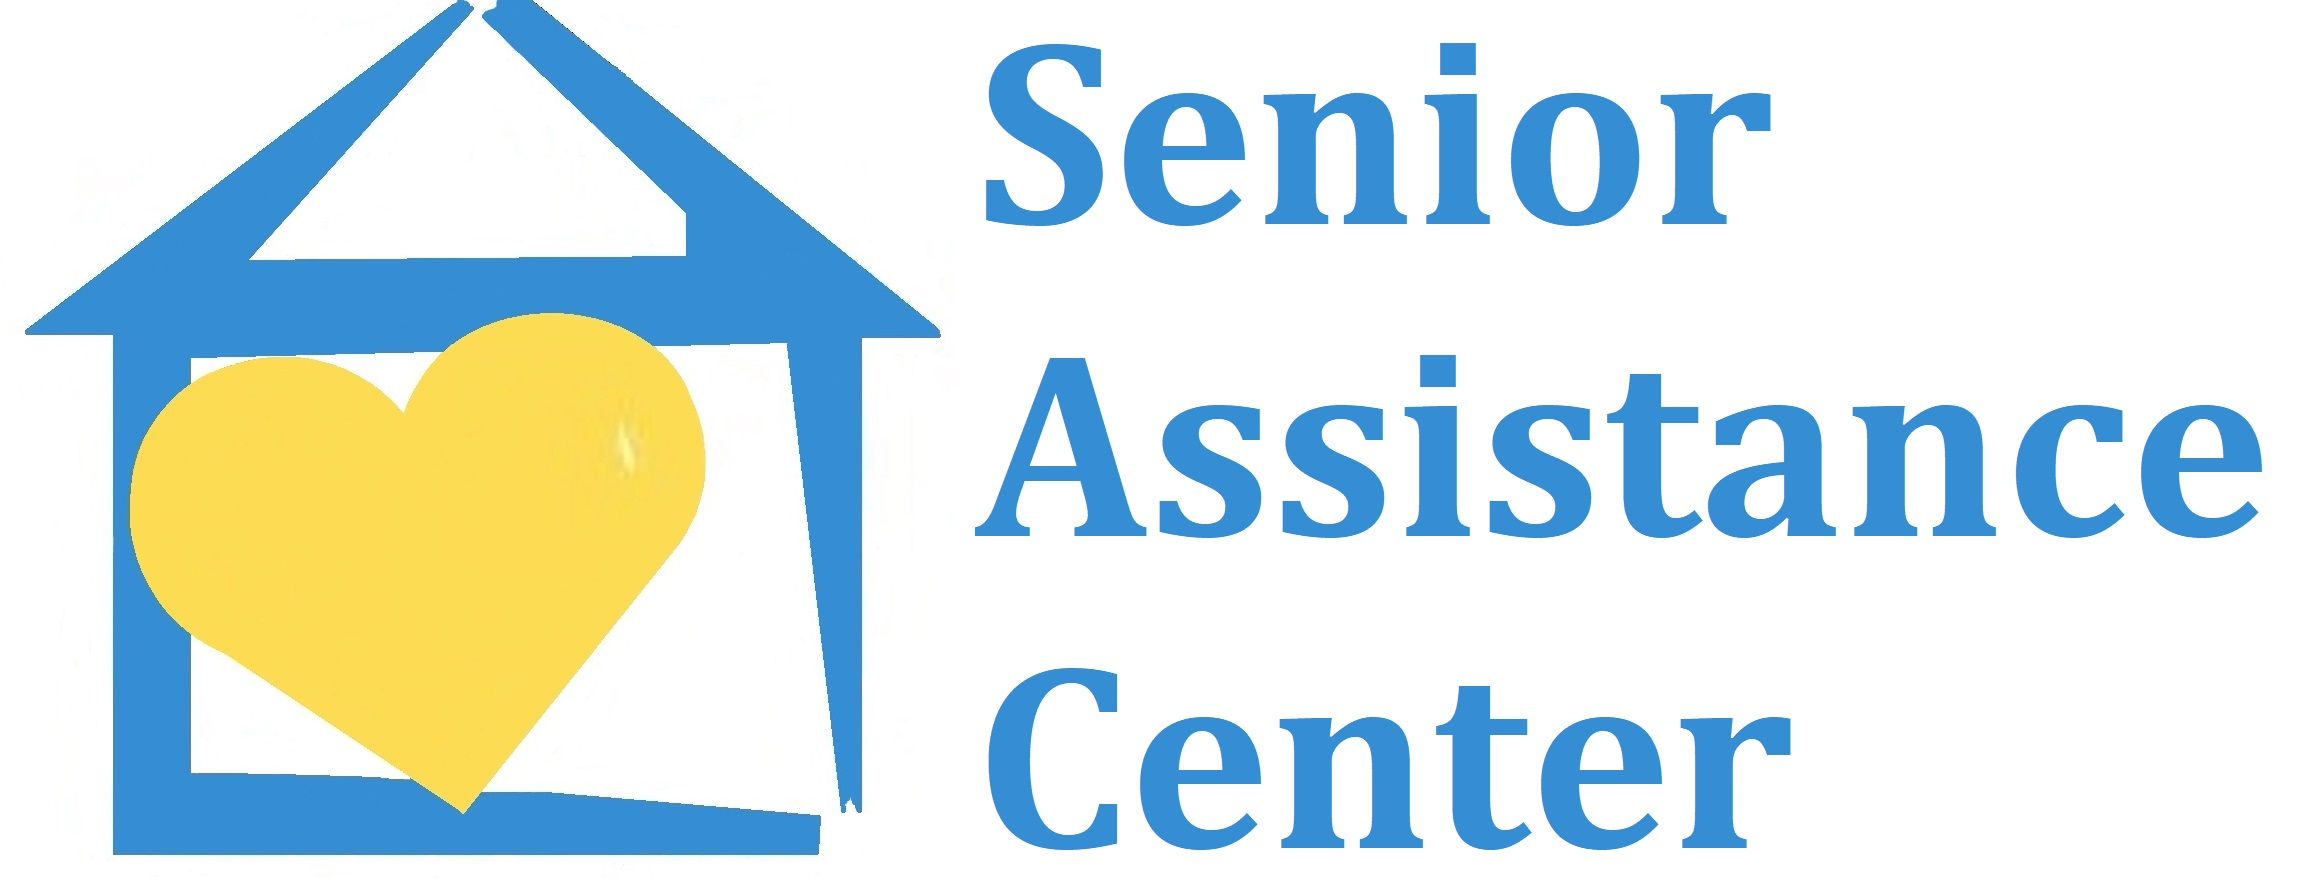 Senior Assistance Center